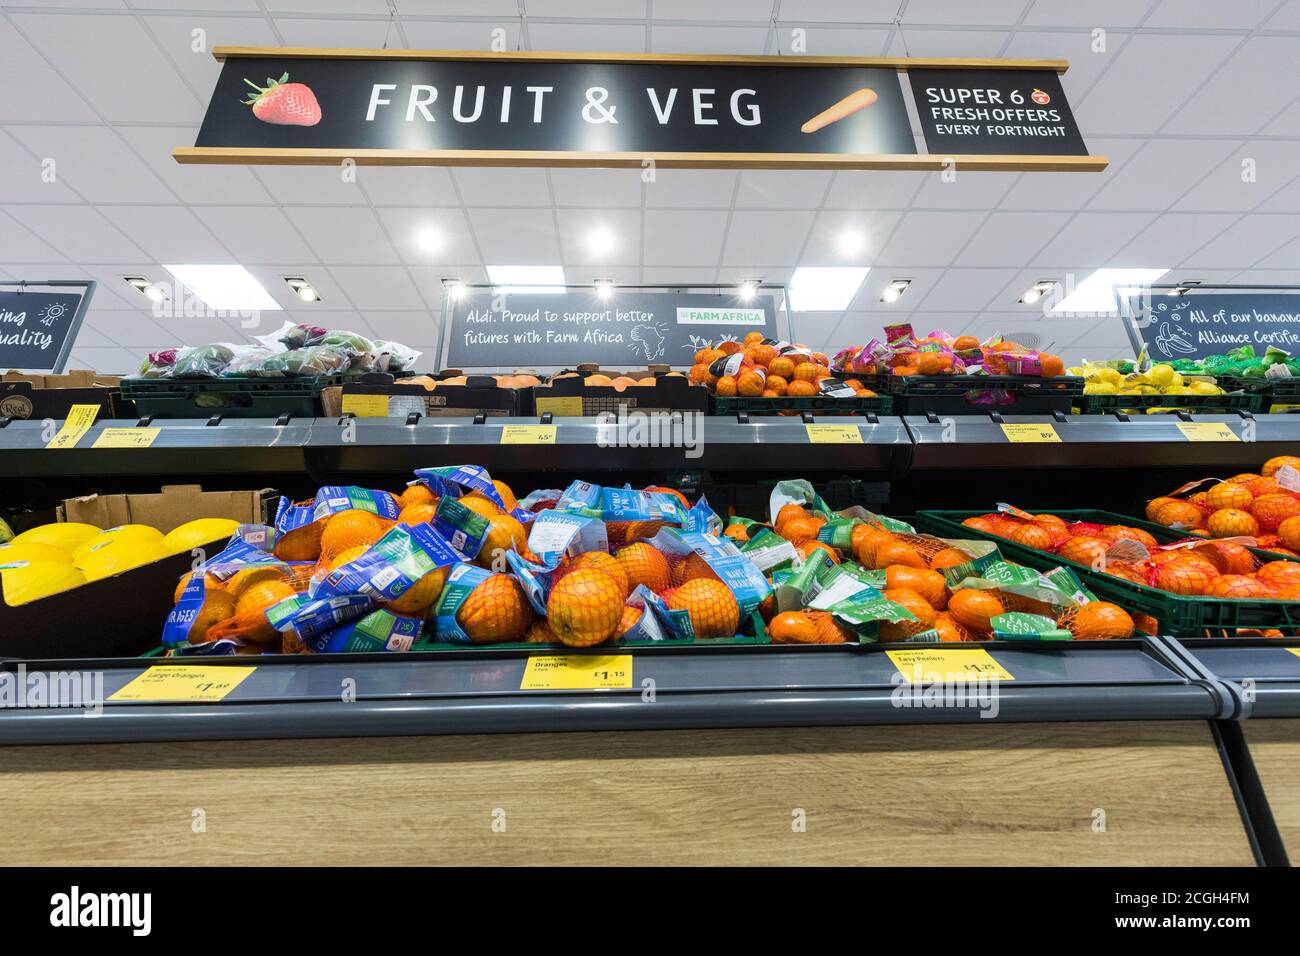 Aldi Supermarket Fruit and vegetable aisle Stock Photo